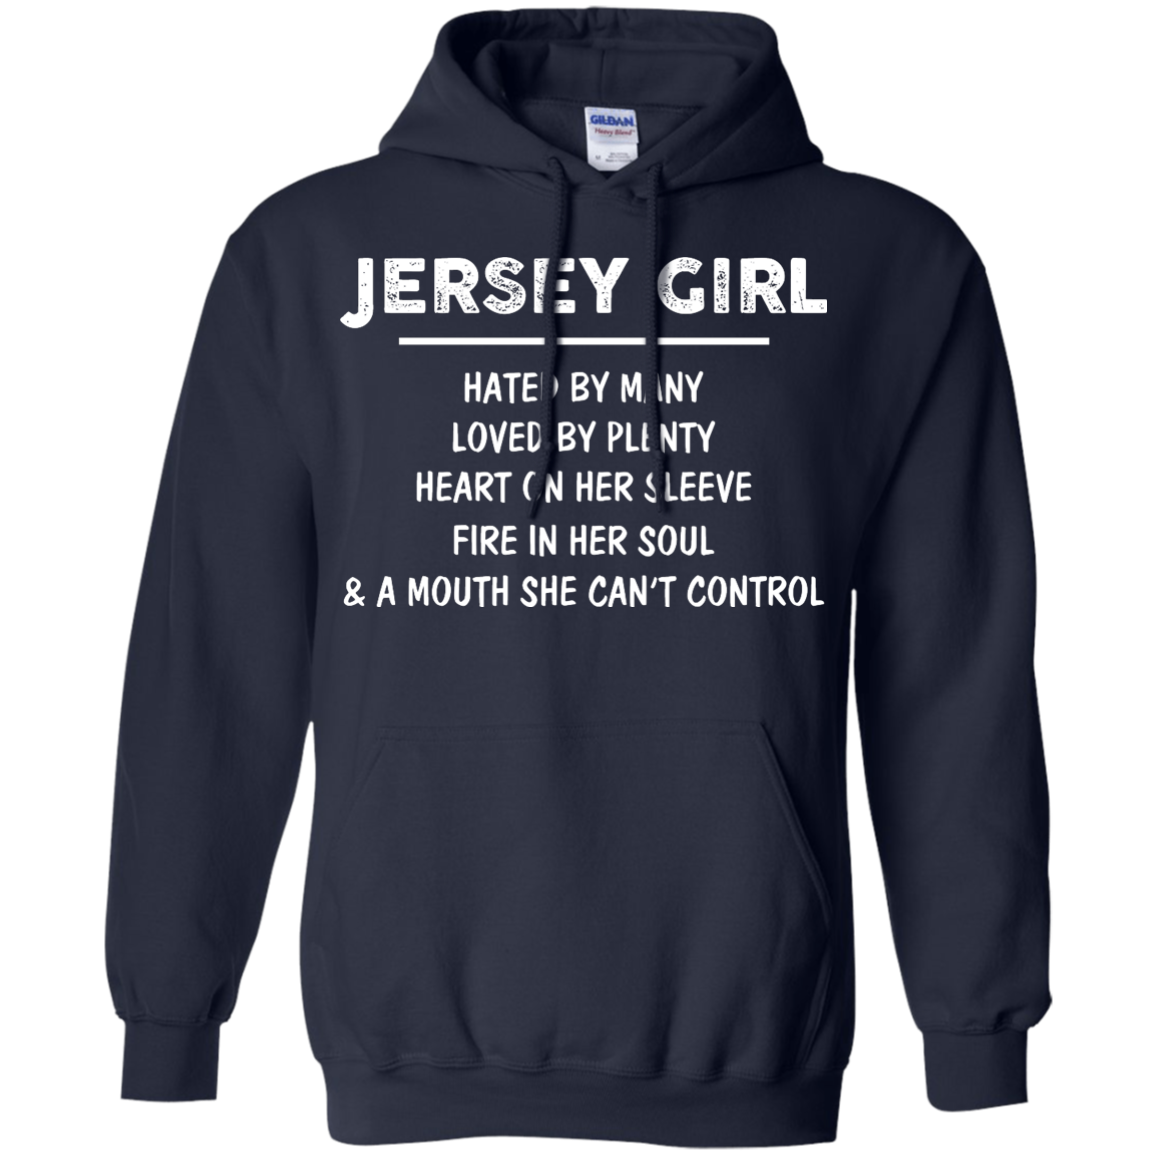 jersey girl hoodie